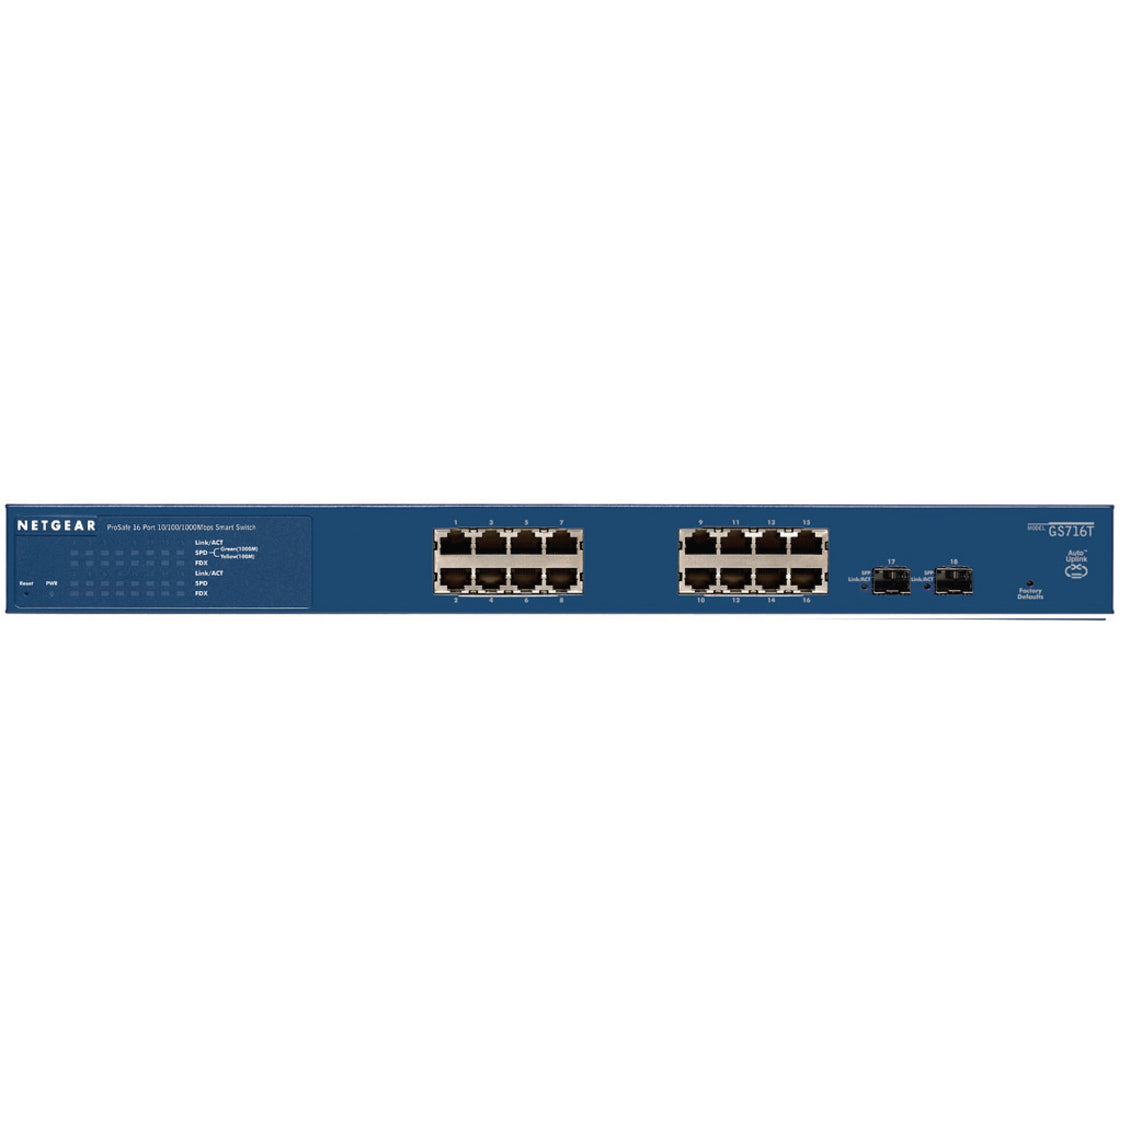 NETGEAR 16-Port Smart Managed Pro Switch, GS716T (GS716T-300NAS)